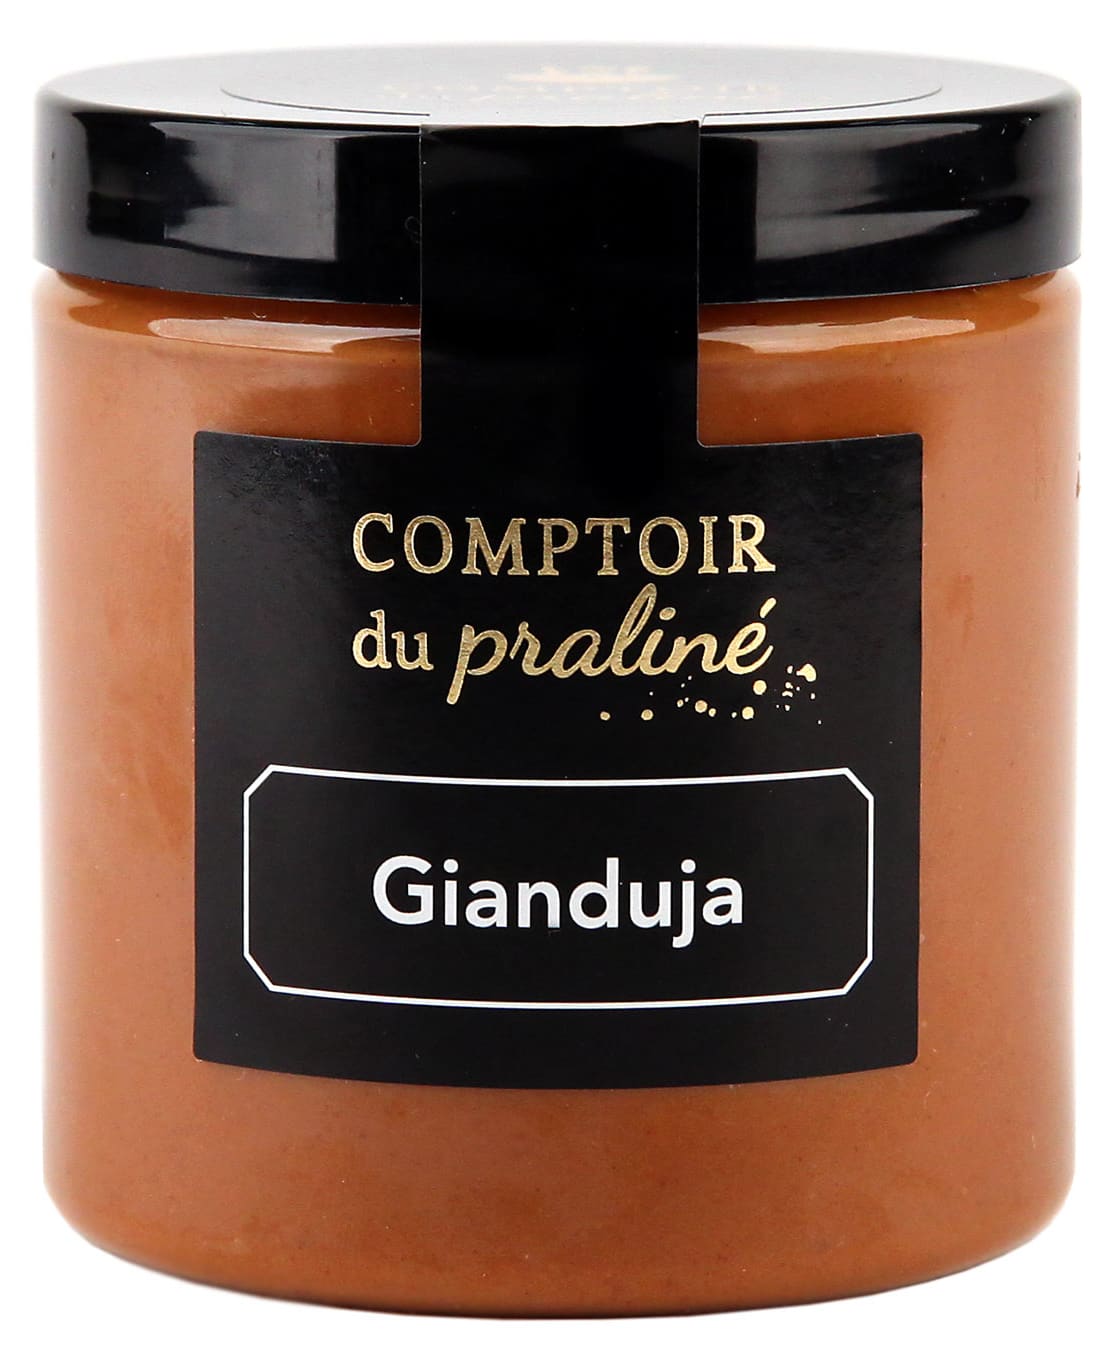 Véritable Gianduja artisanal - 250 g - Comptoir du Praliné